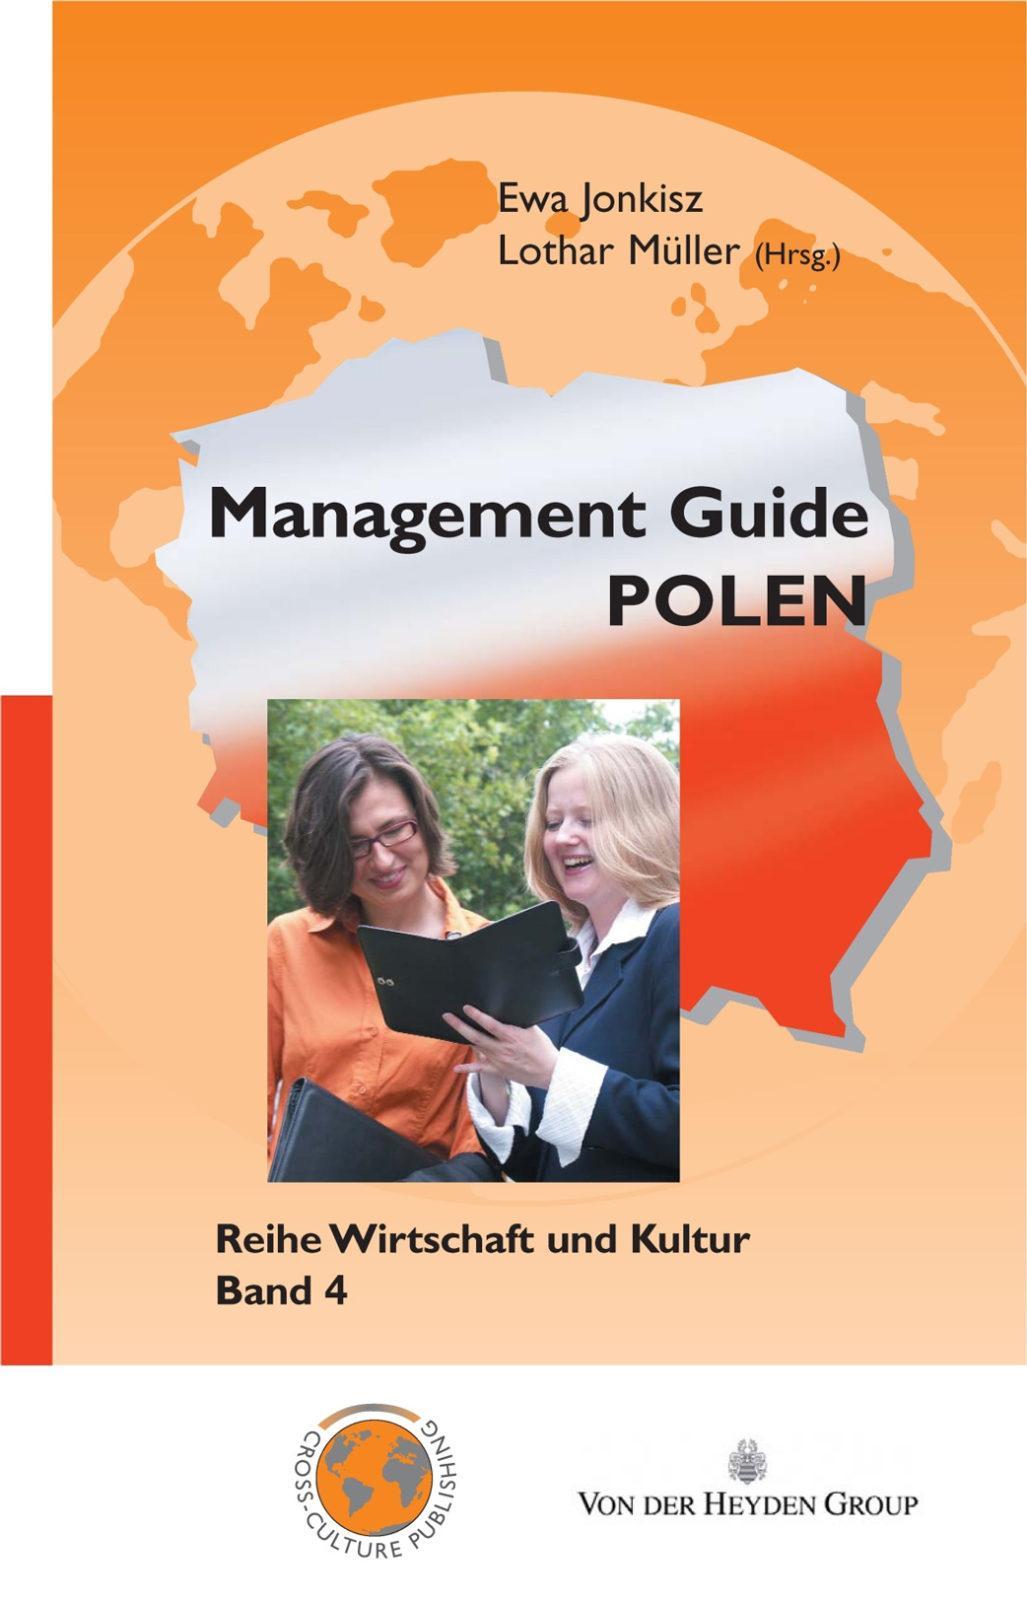 Management Guide Poland